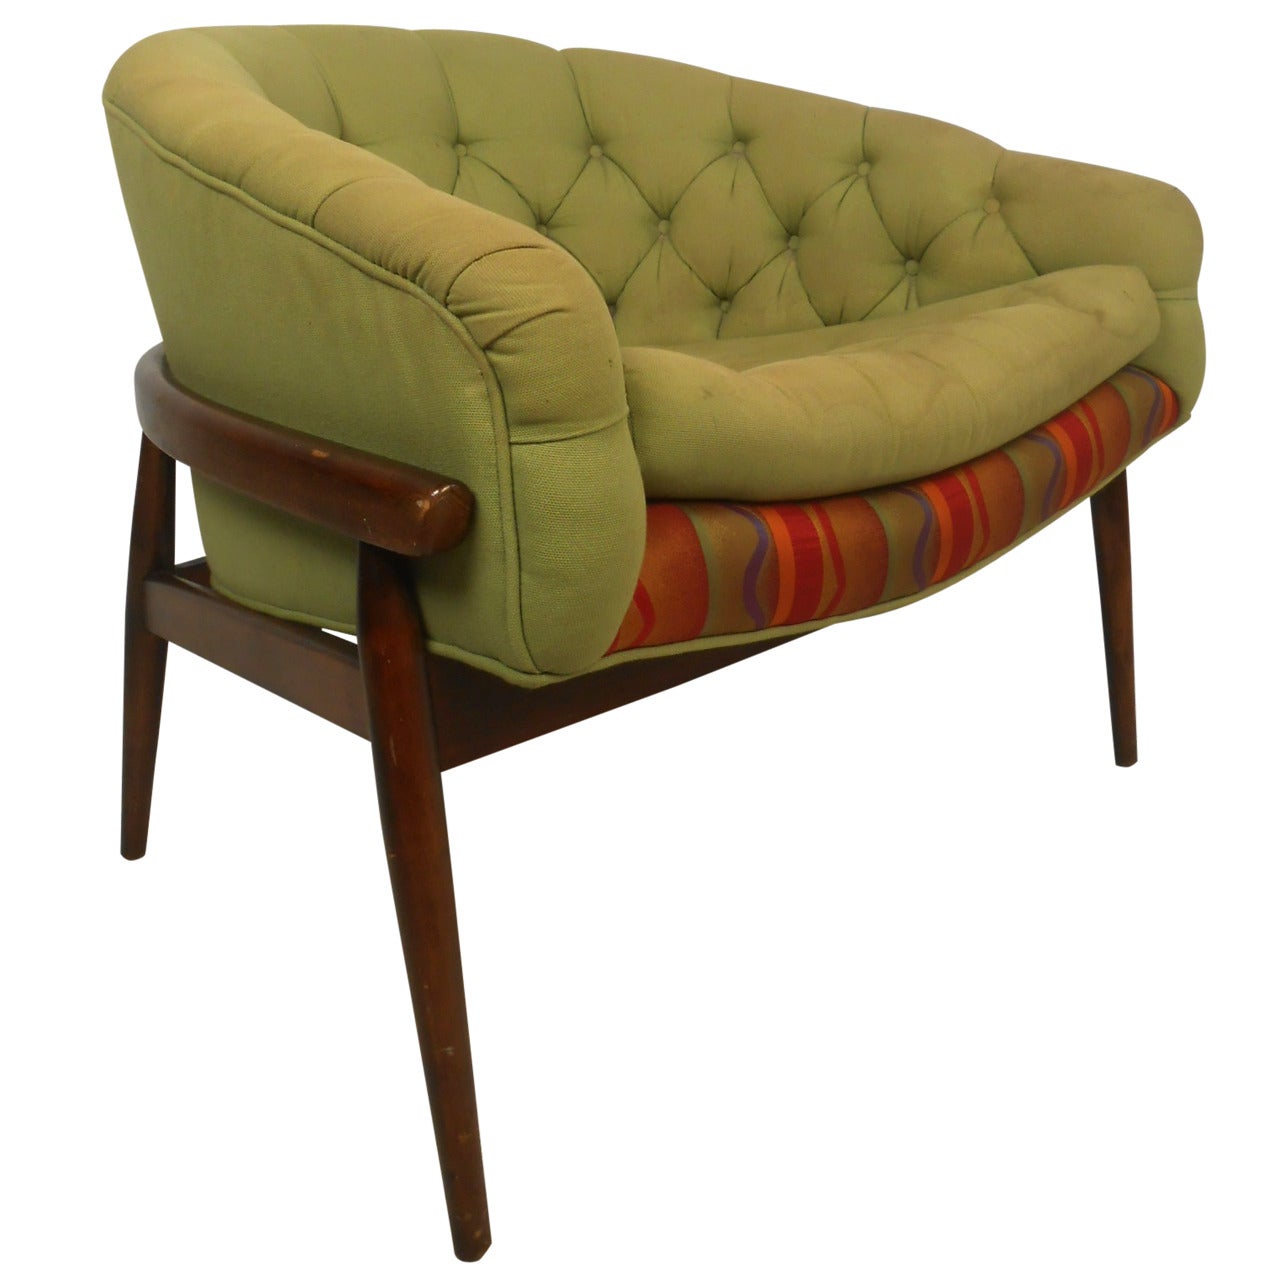 Stylish Mid-Century Modern Tufted Lounge Chair